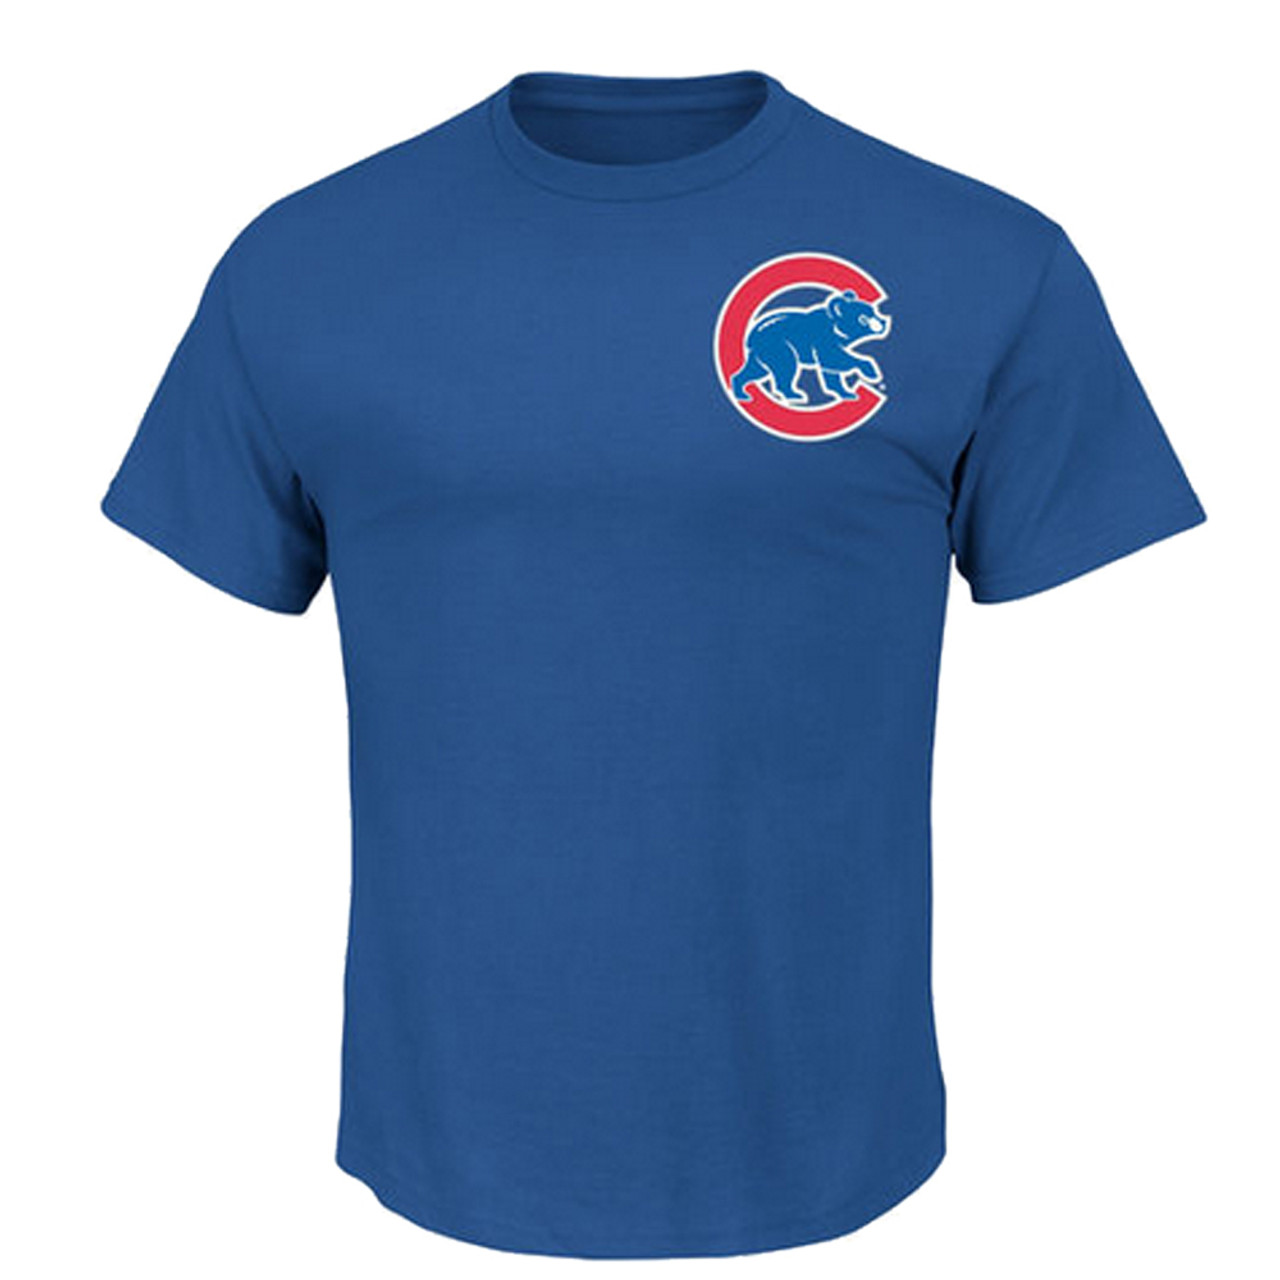 Majestic Chicago Cubs T Shirt Blue 100% Cotton Mens Size Medium MLB Baseball